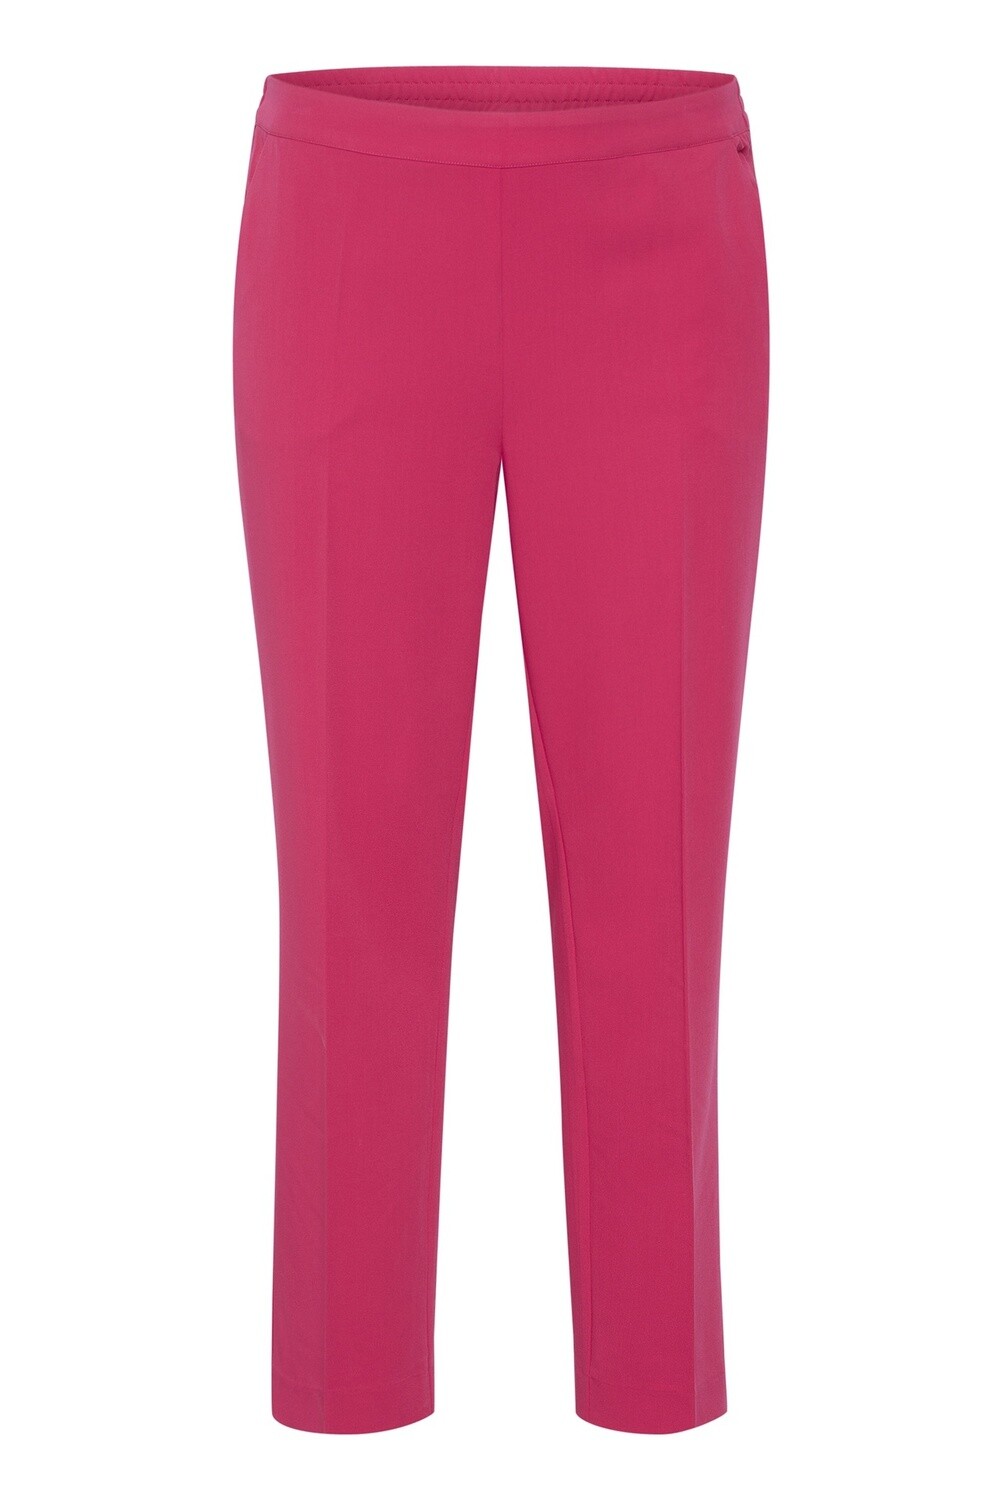 KCSAKIRA LONG PANTS, maat: 42, kleur: Virtual Pink